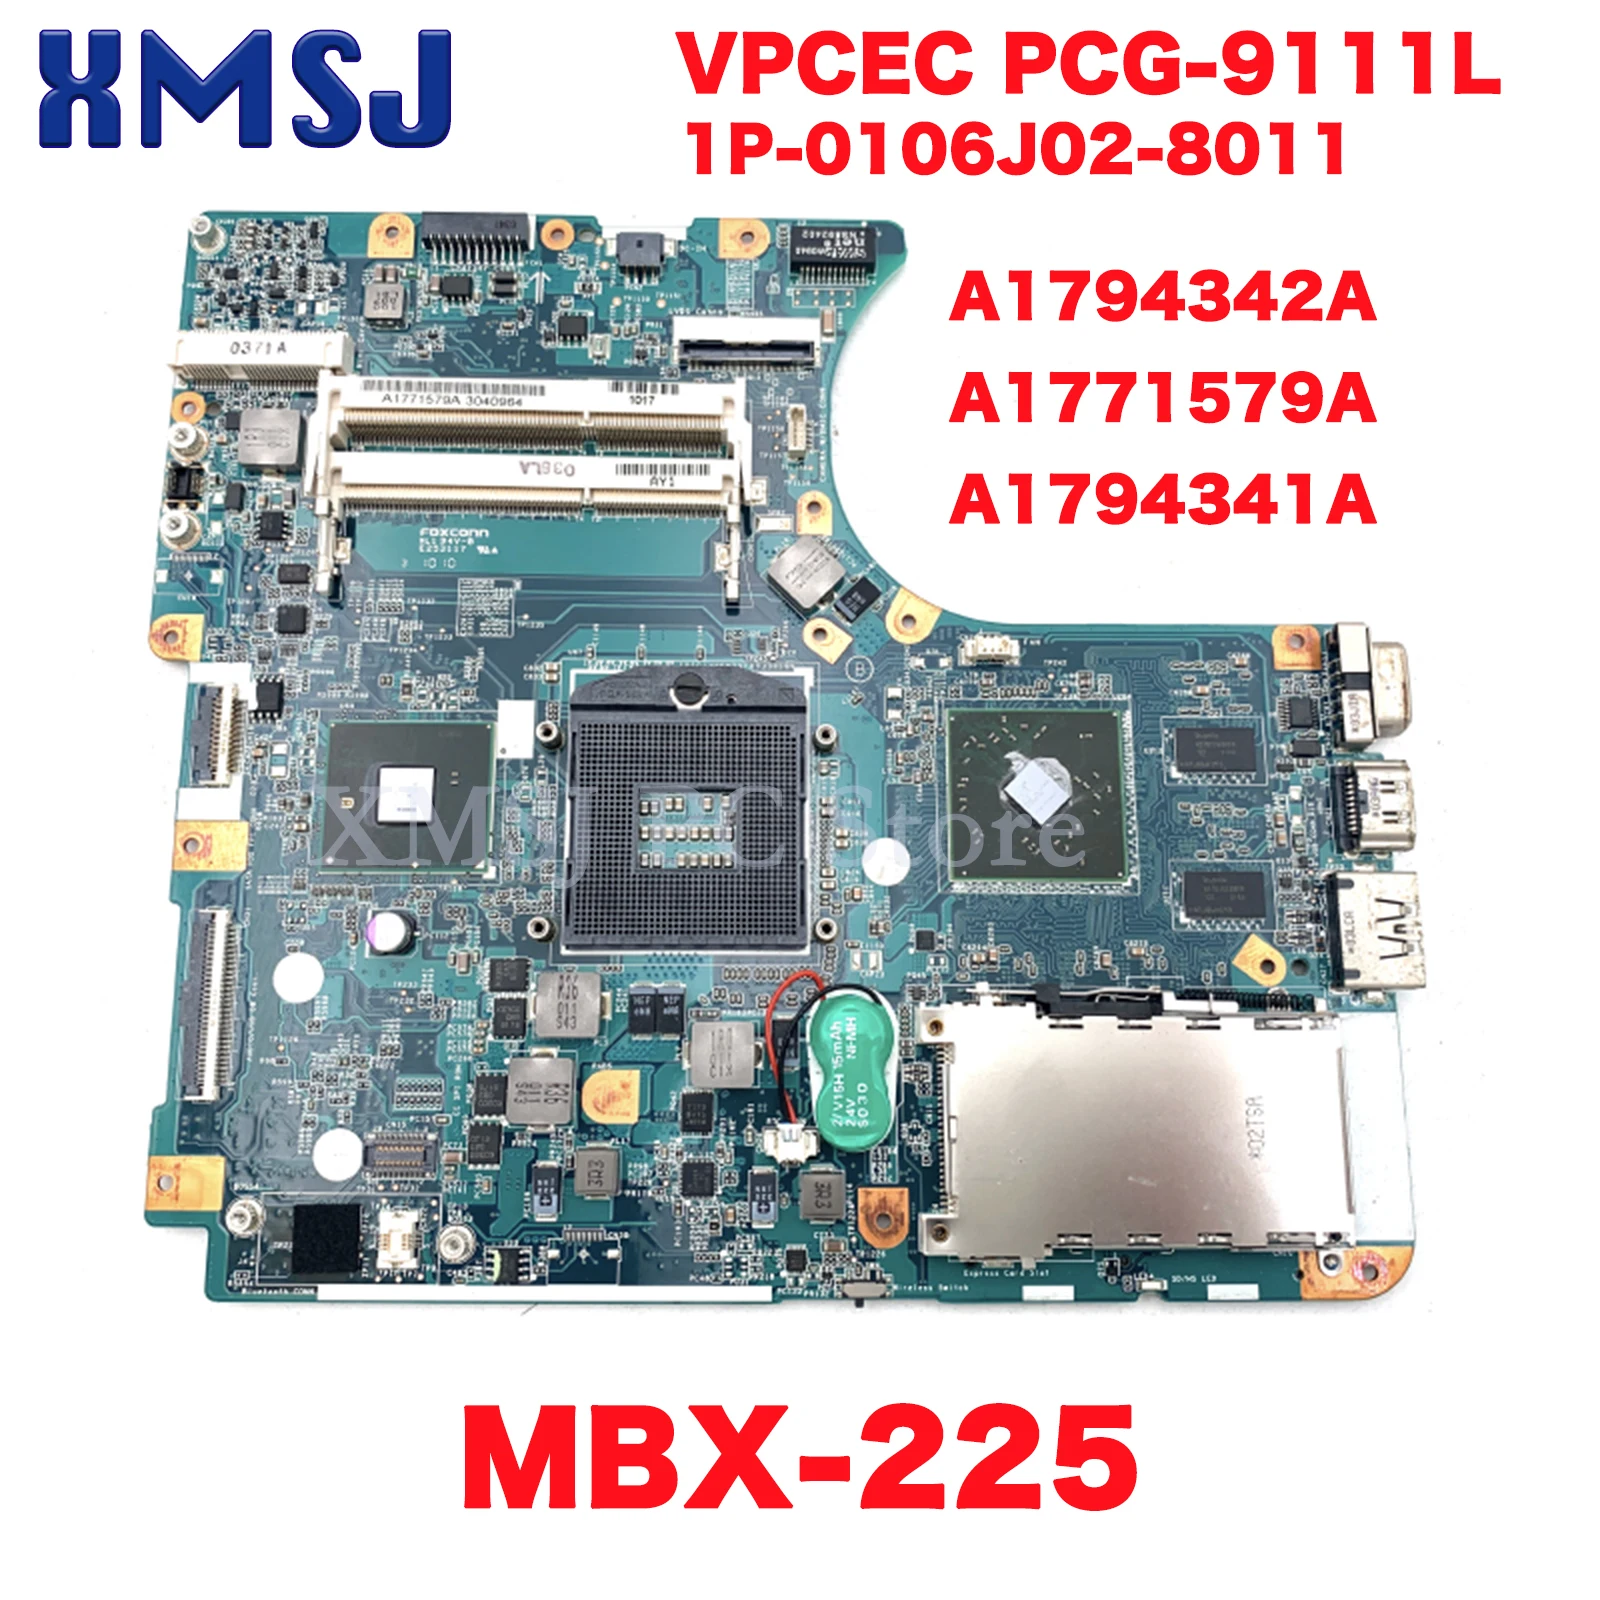 XMSJ A1794342A A1771579A A1794341A For Sony VPCEC PCG-9111L Laptop Motherboard 1P-0106J02-8011 MBX-225 M981 MAIN BOARD